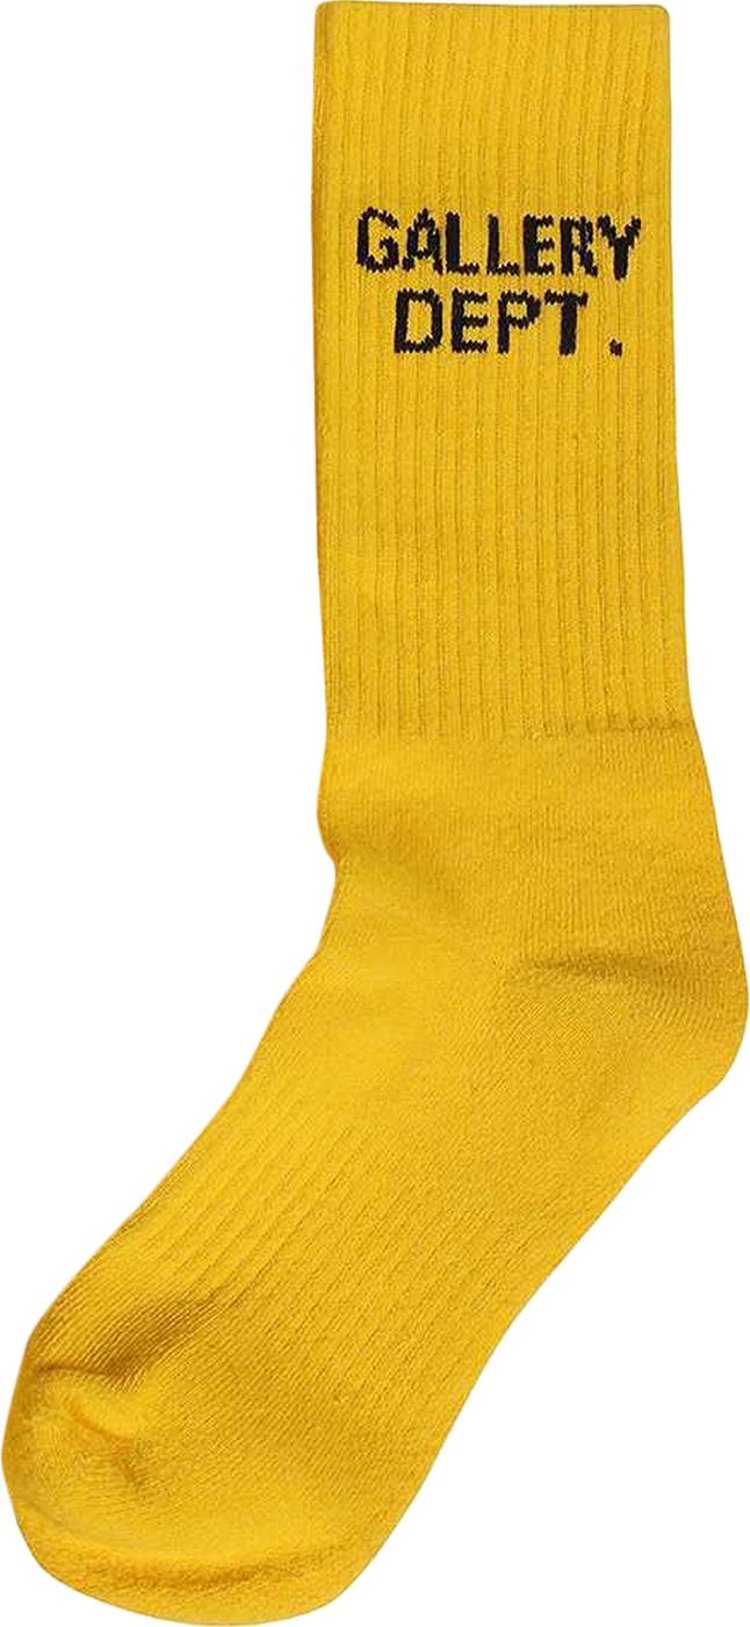 Gallery Dept. Clean Socks 'Fluorescent Yellow'